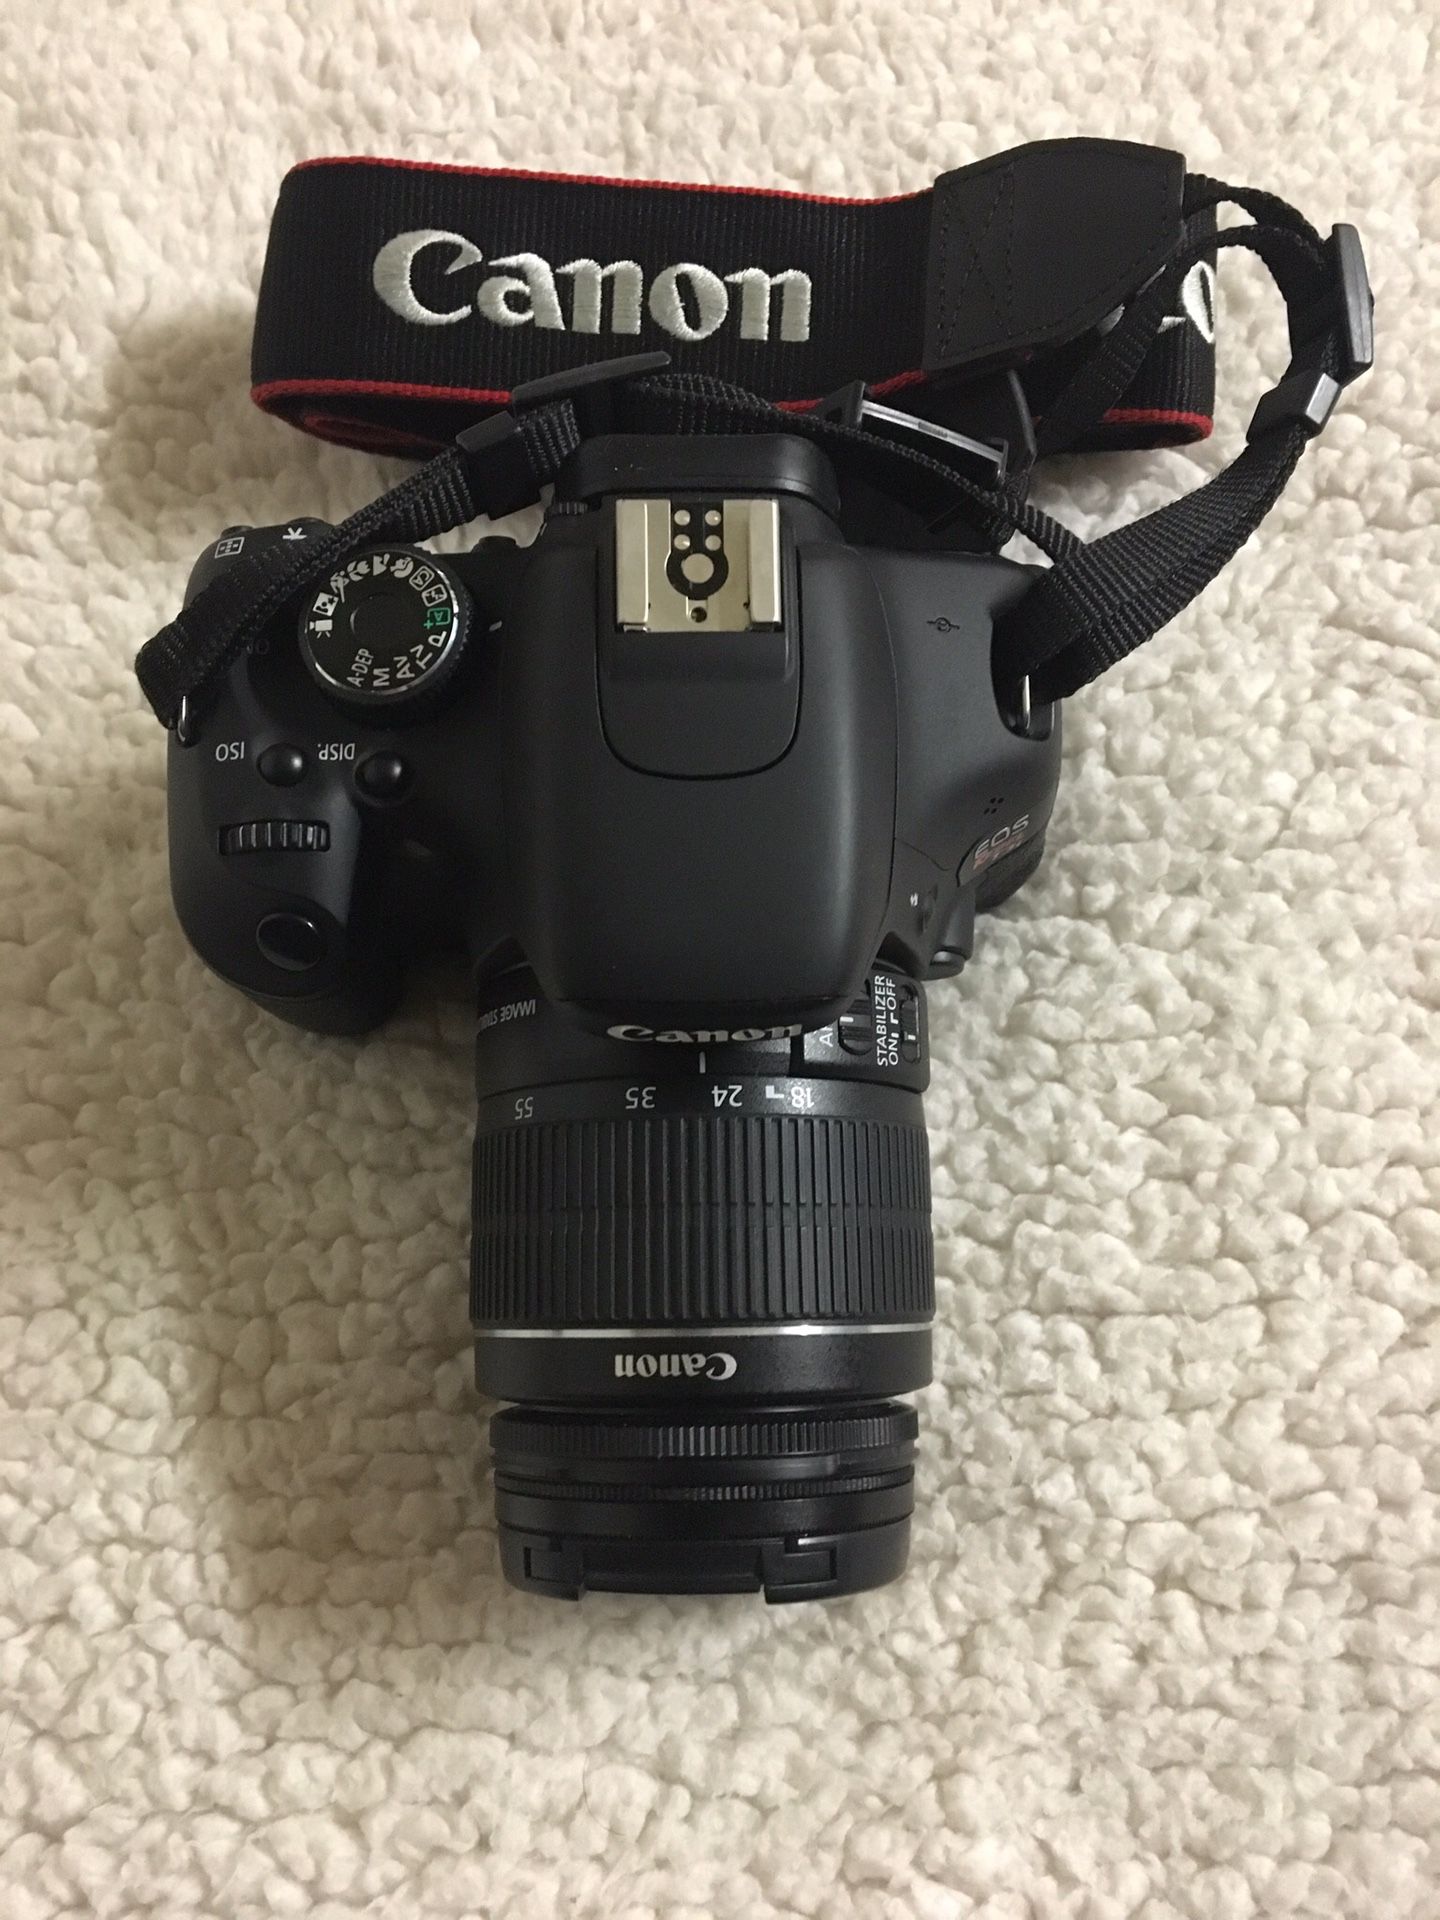 Canon T3i Digital Camera